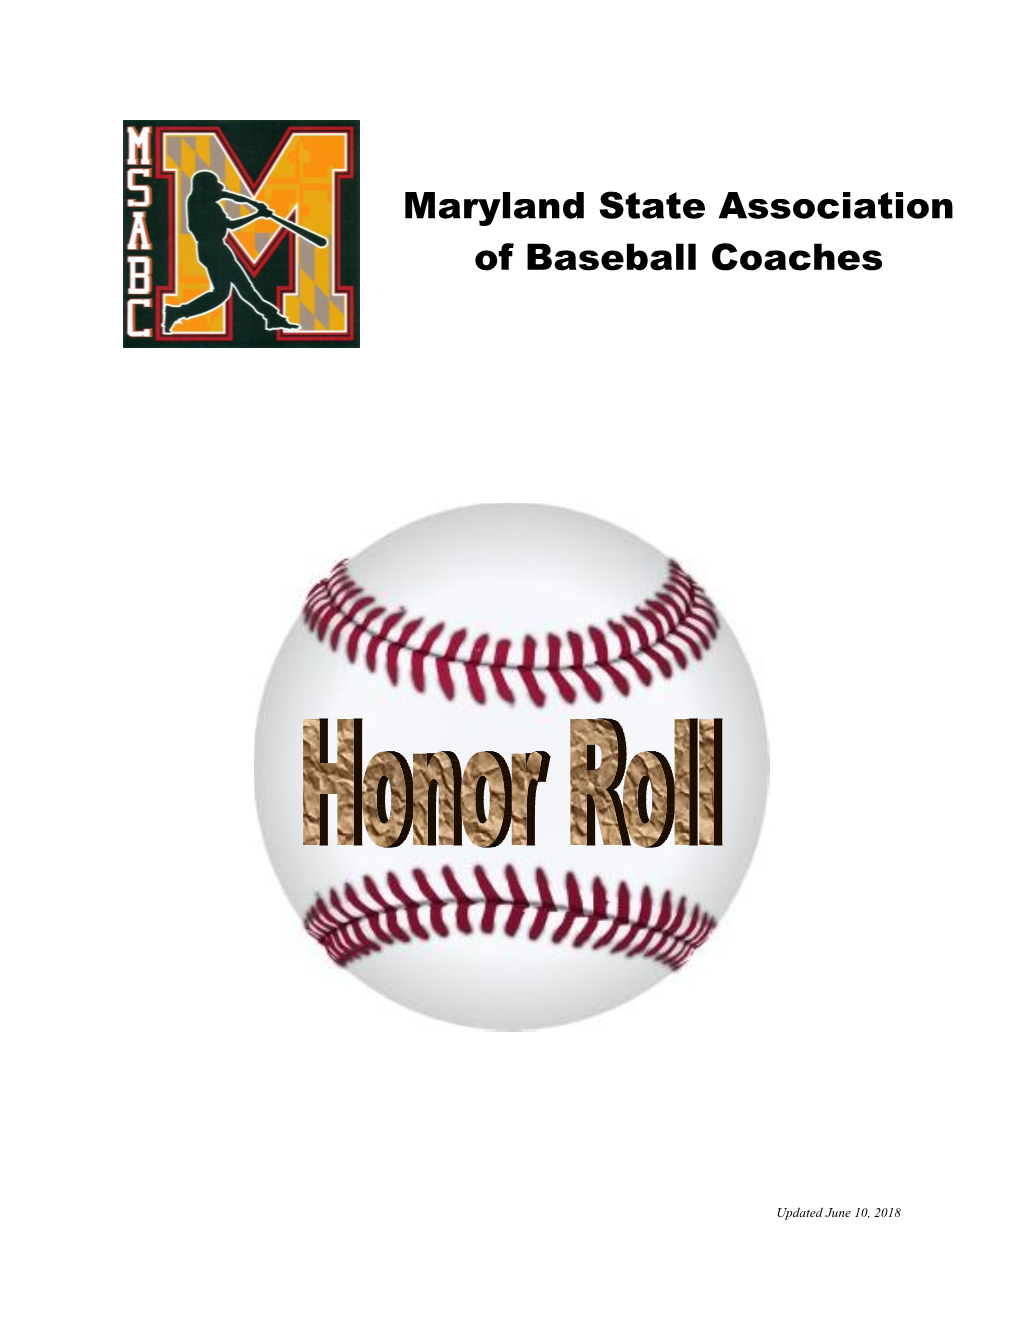 Maryland State Association of Baseball